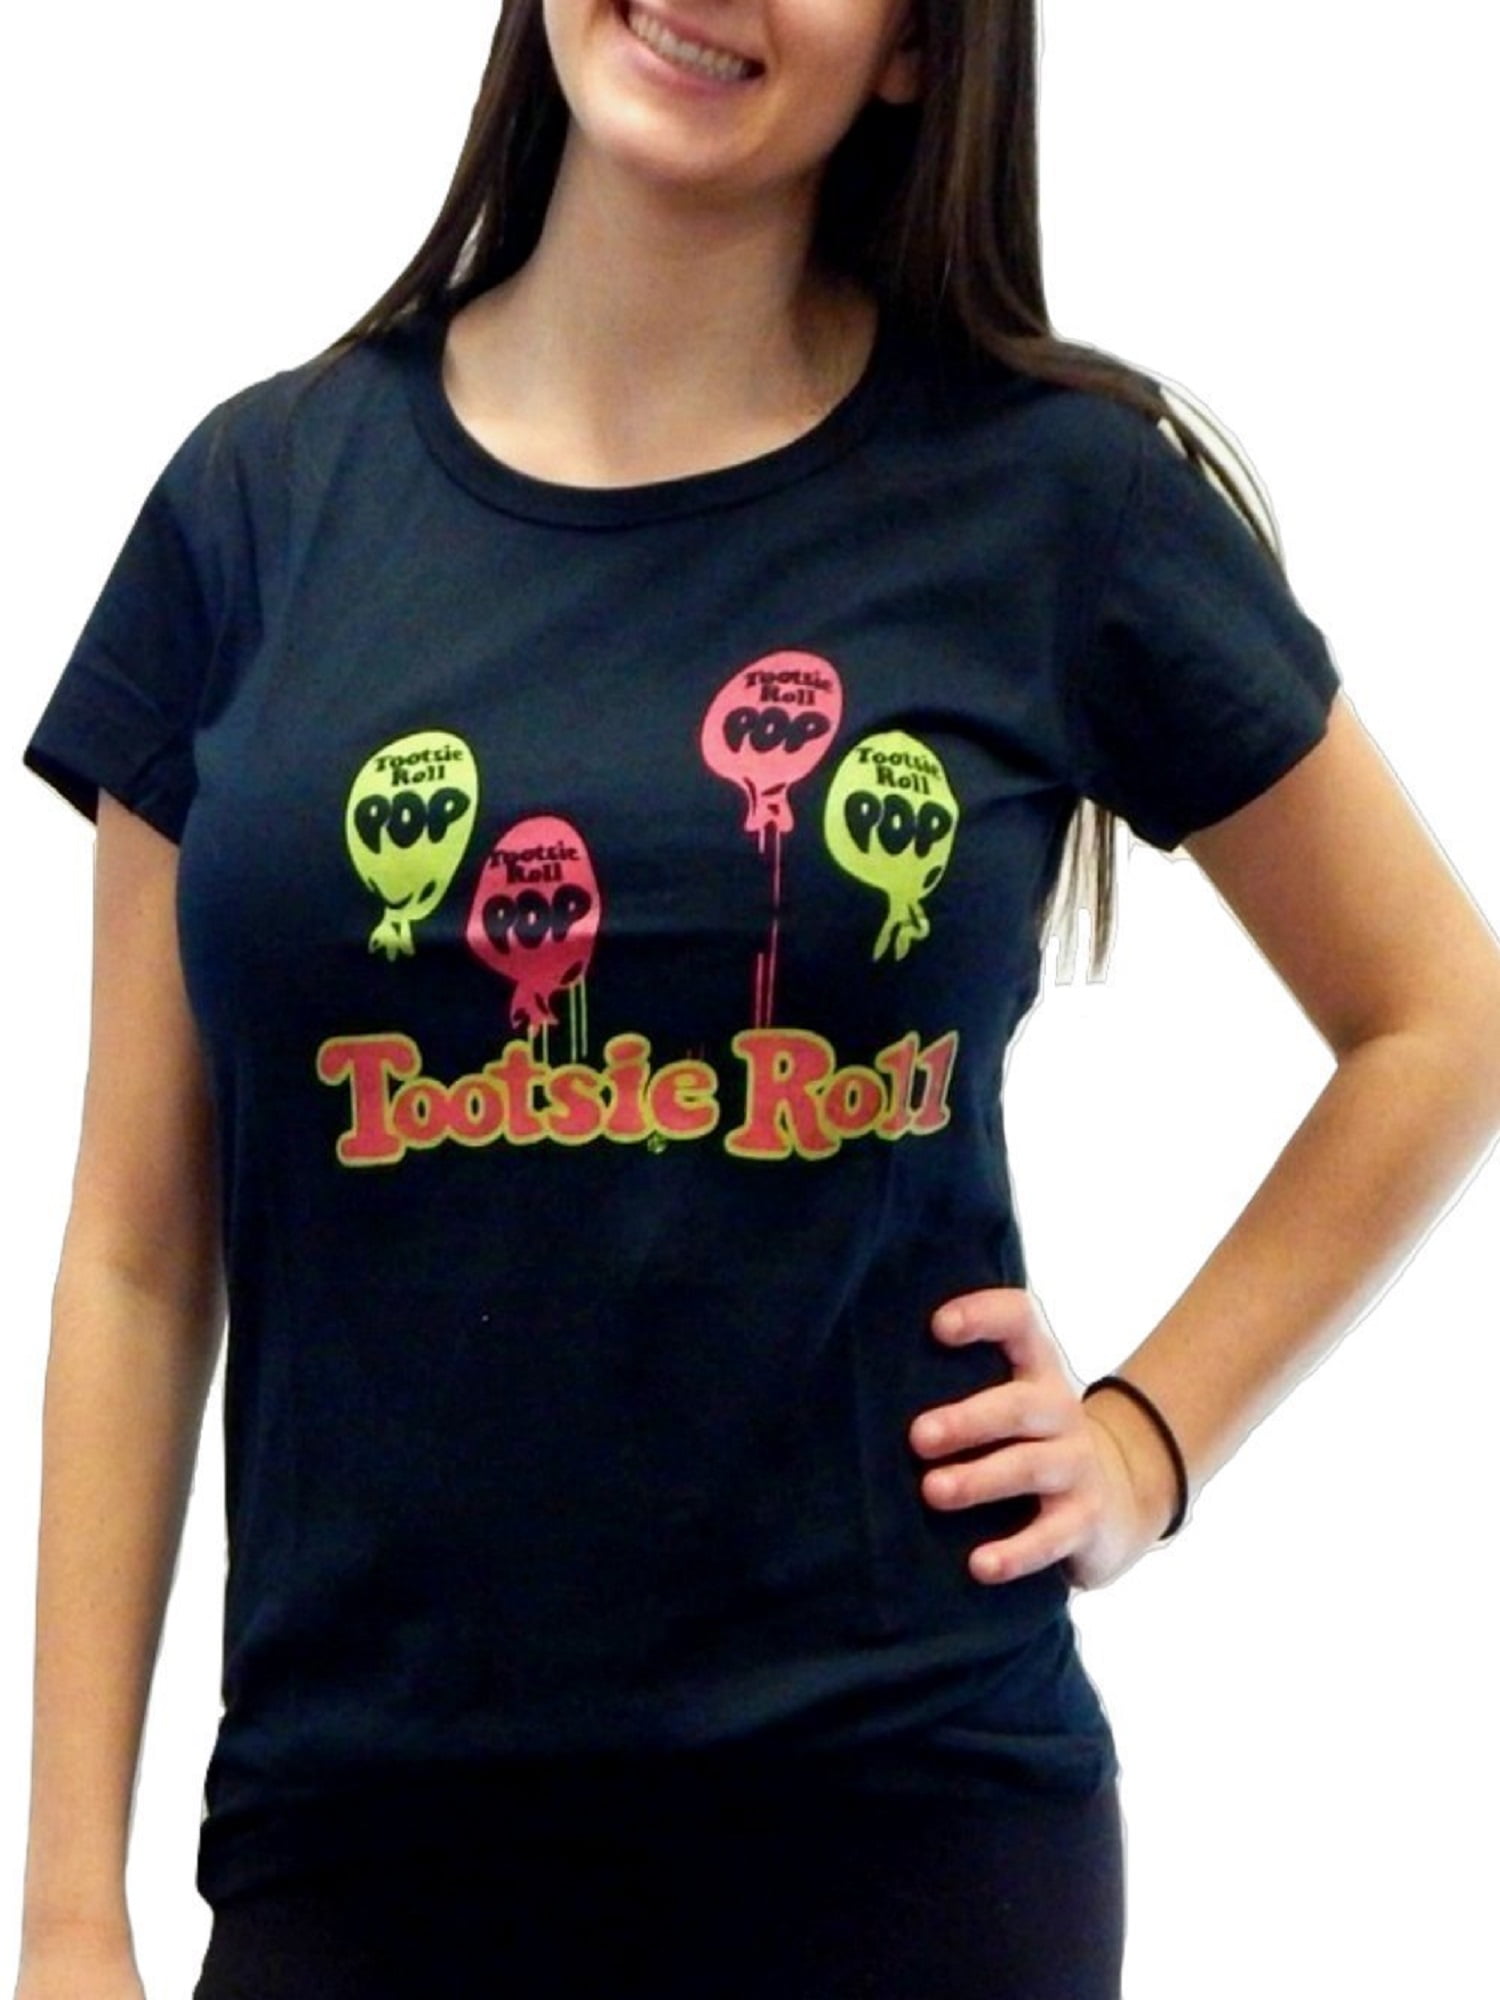 Roll Pop Juniors Short Sleeve T-Shirt Tee Top Candy Color T-Shirts (Size Medium, Black) - Walmart.com